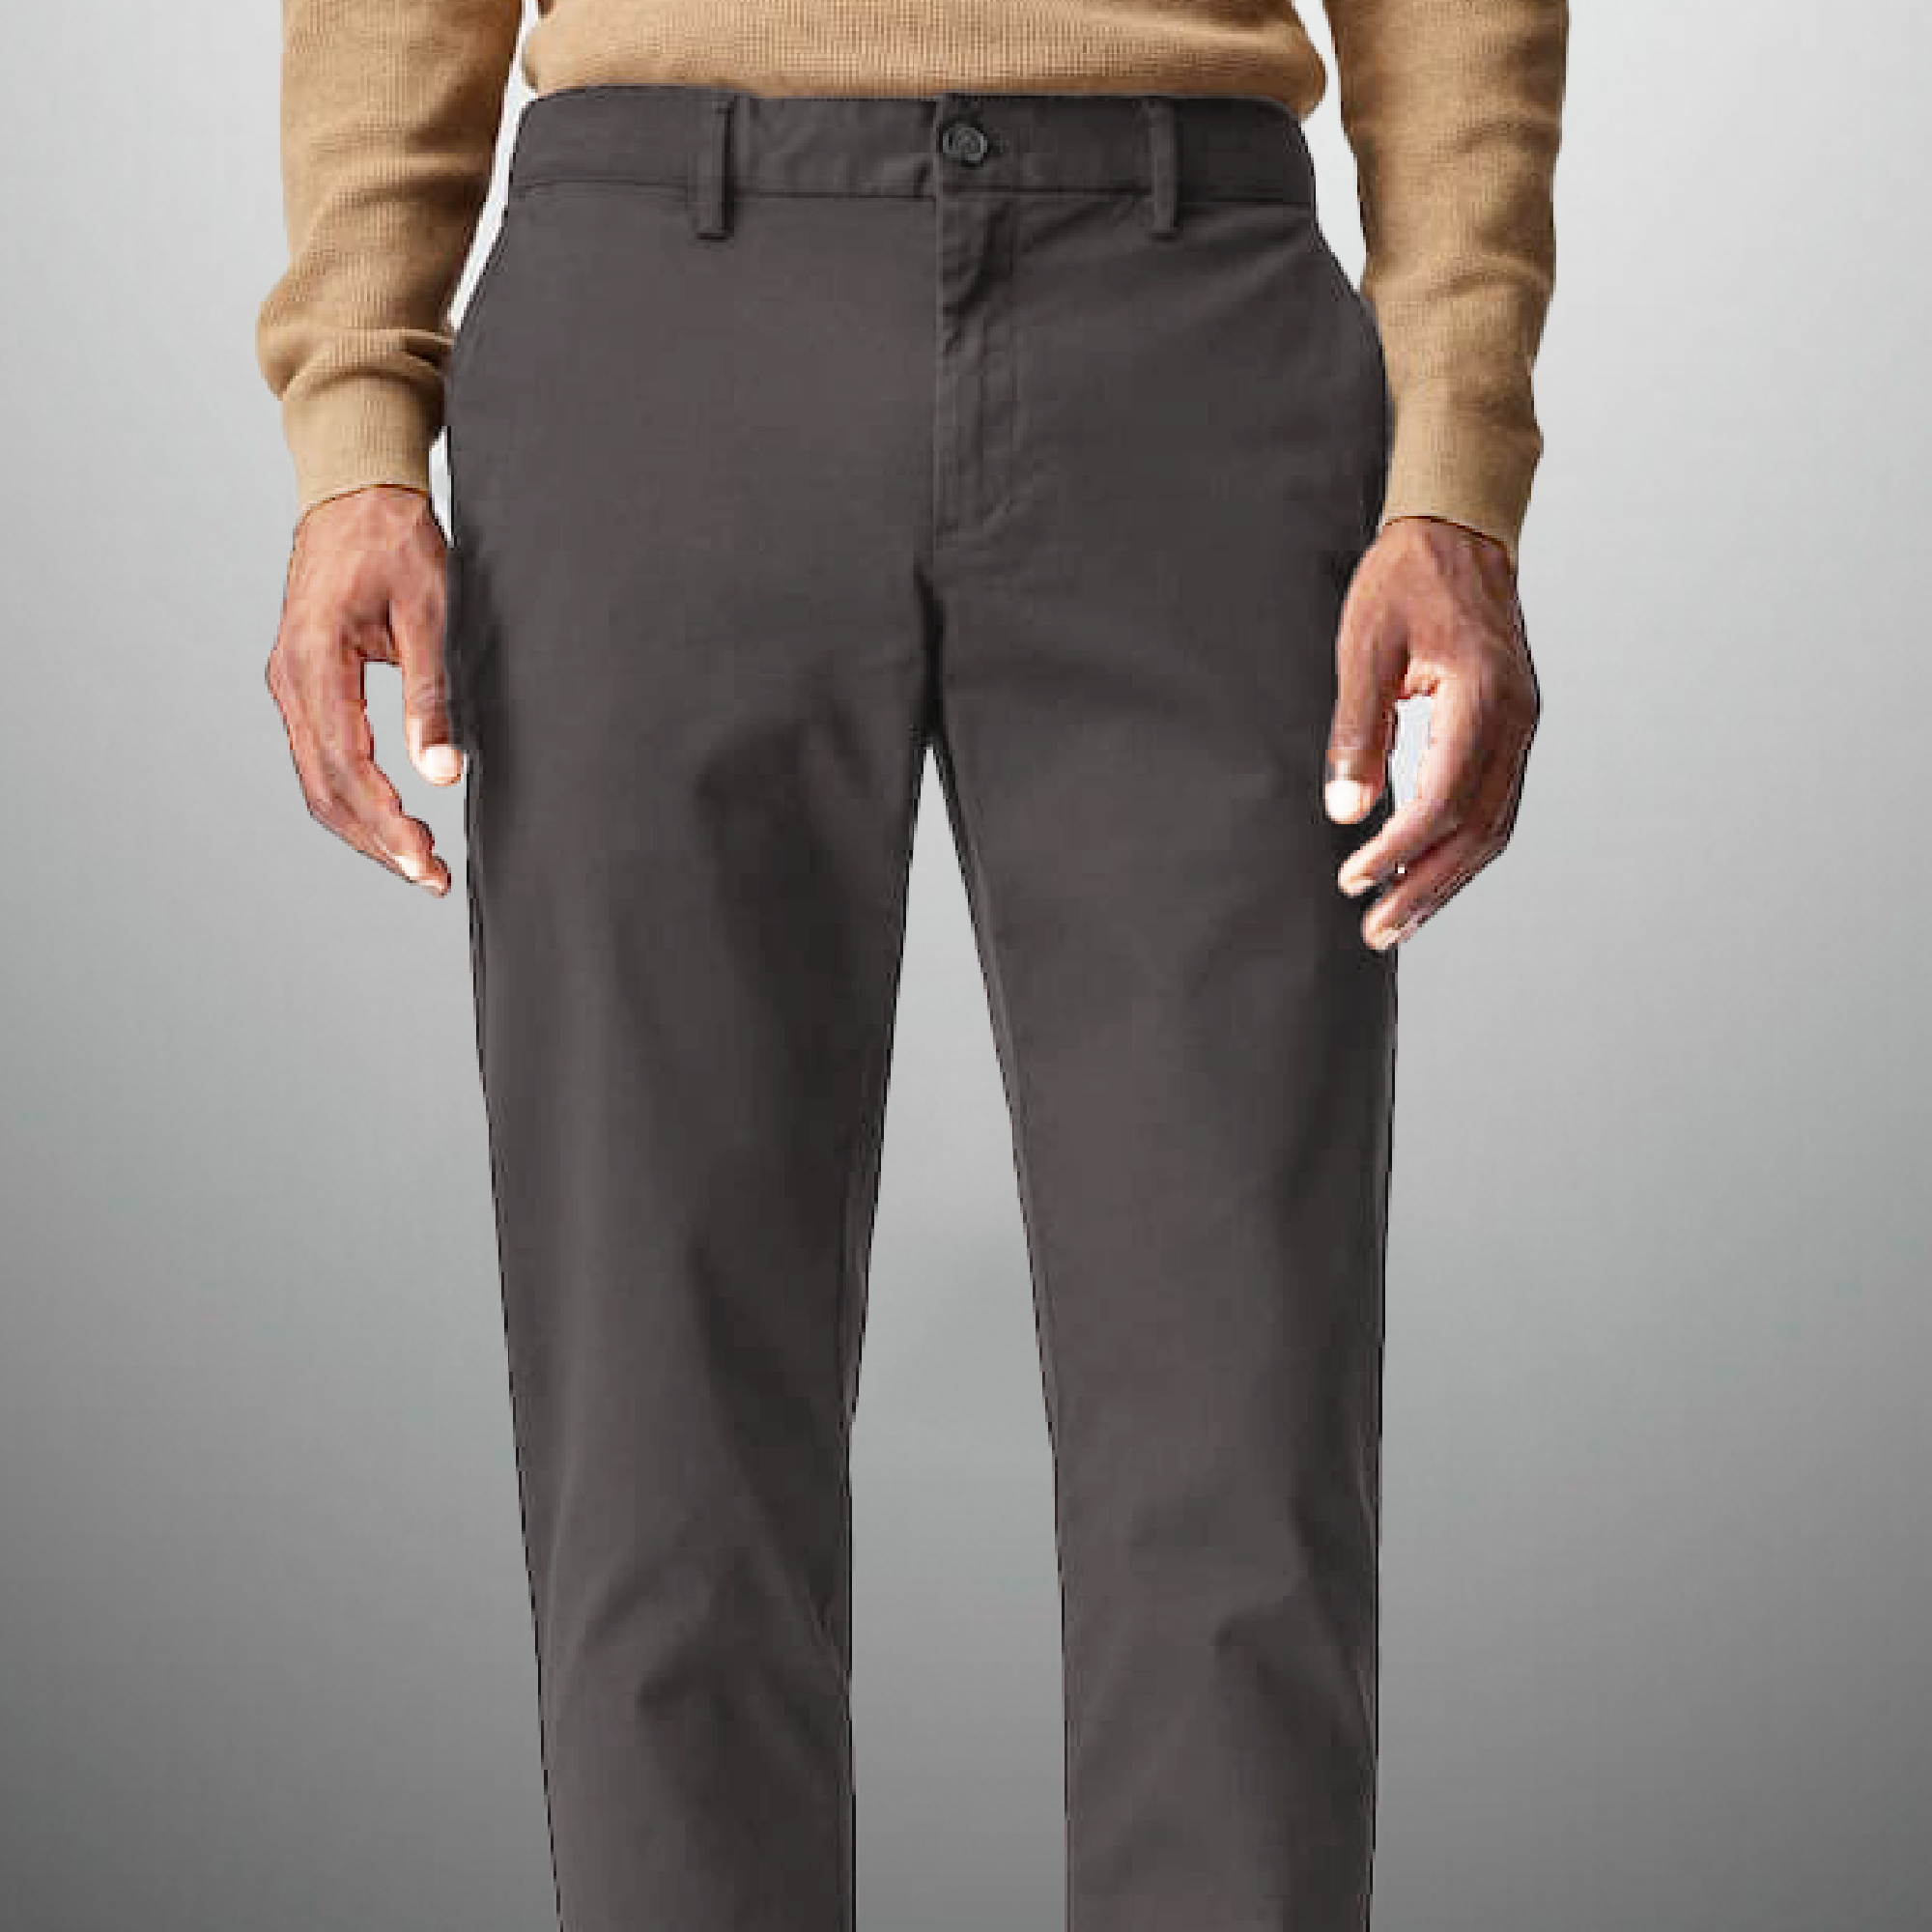 Men's Grey Ankle length Straight Pant-RMT006